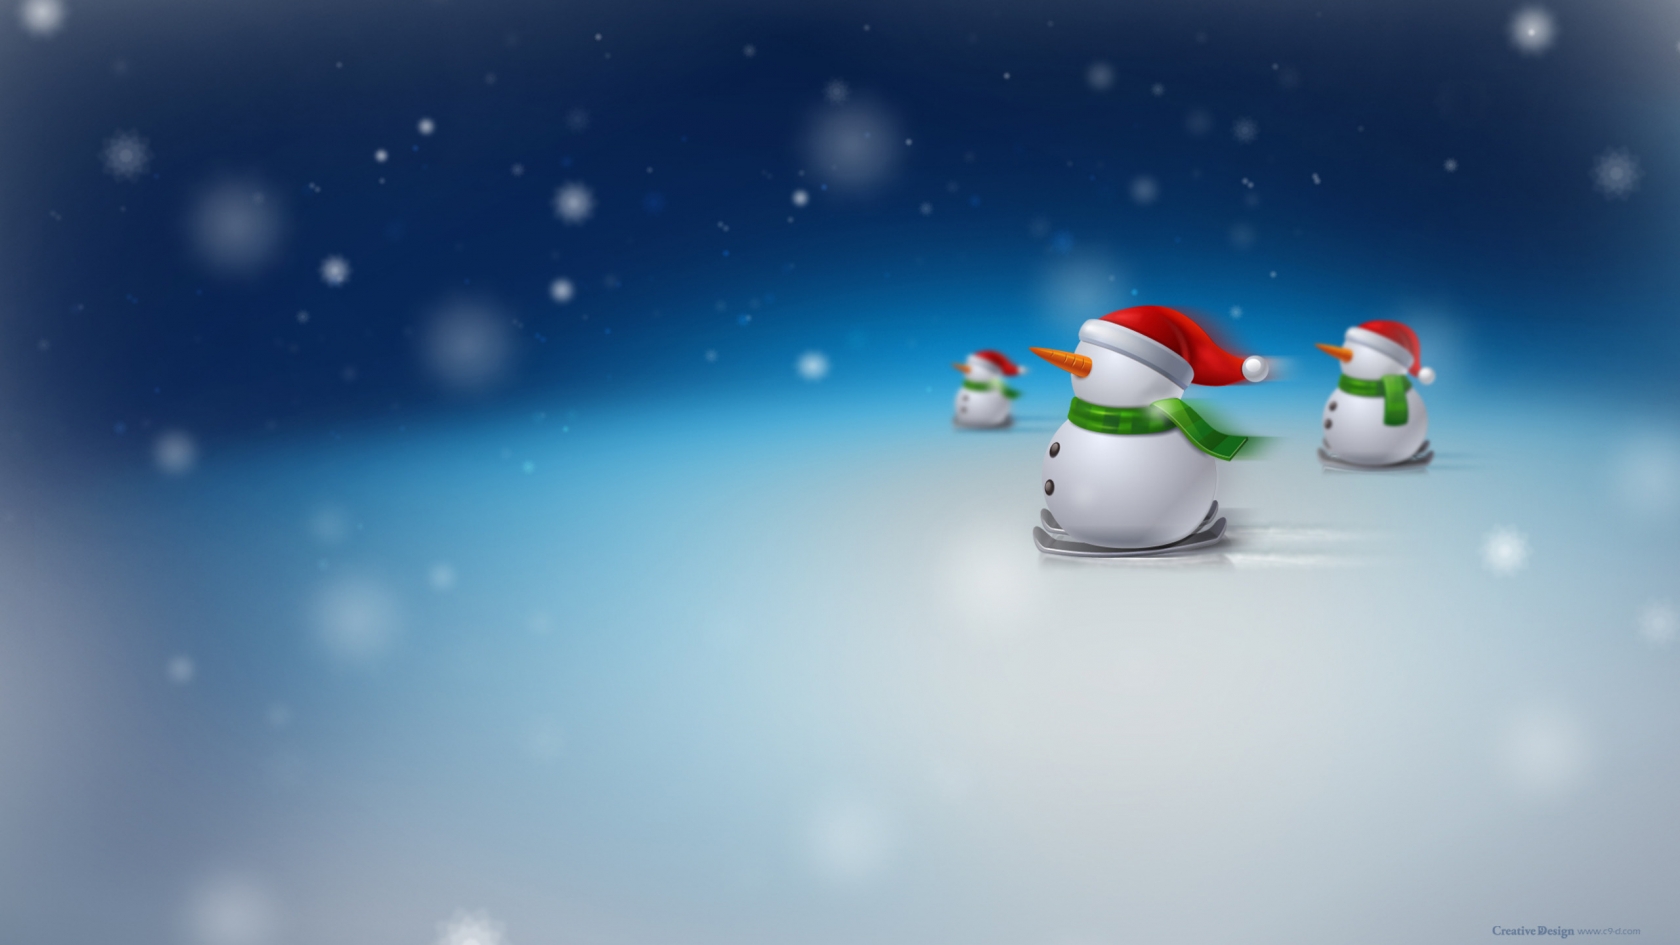 Snowman for 1680 x 945 HDTV resolution